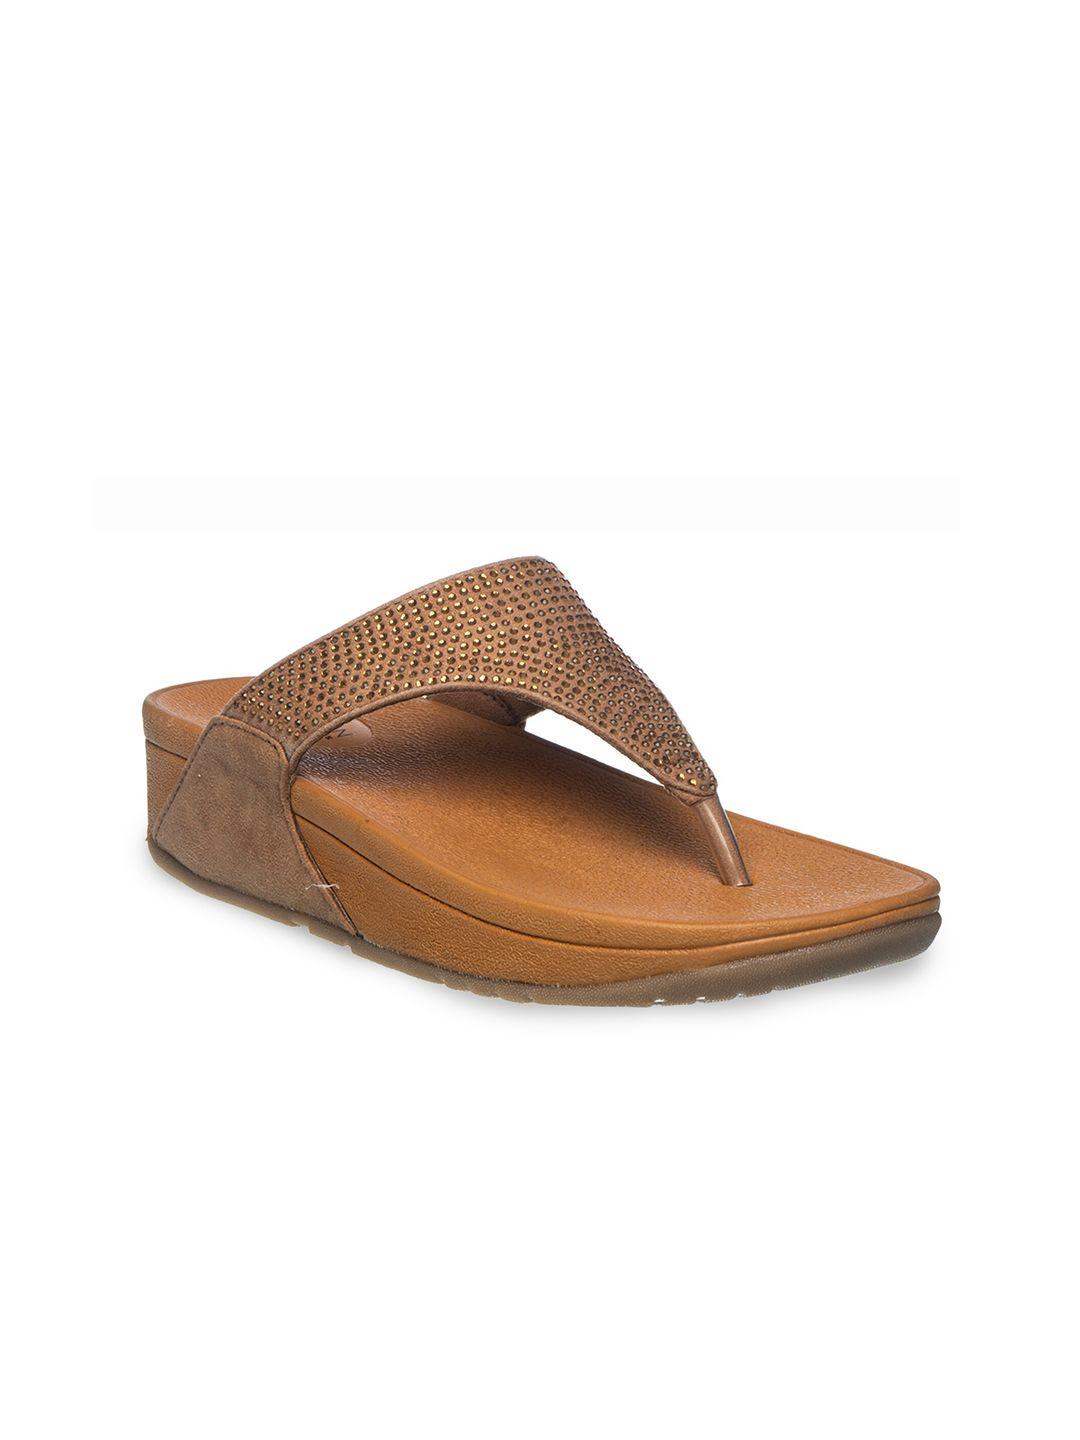 khadims women brown embellished open toe flats